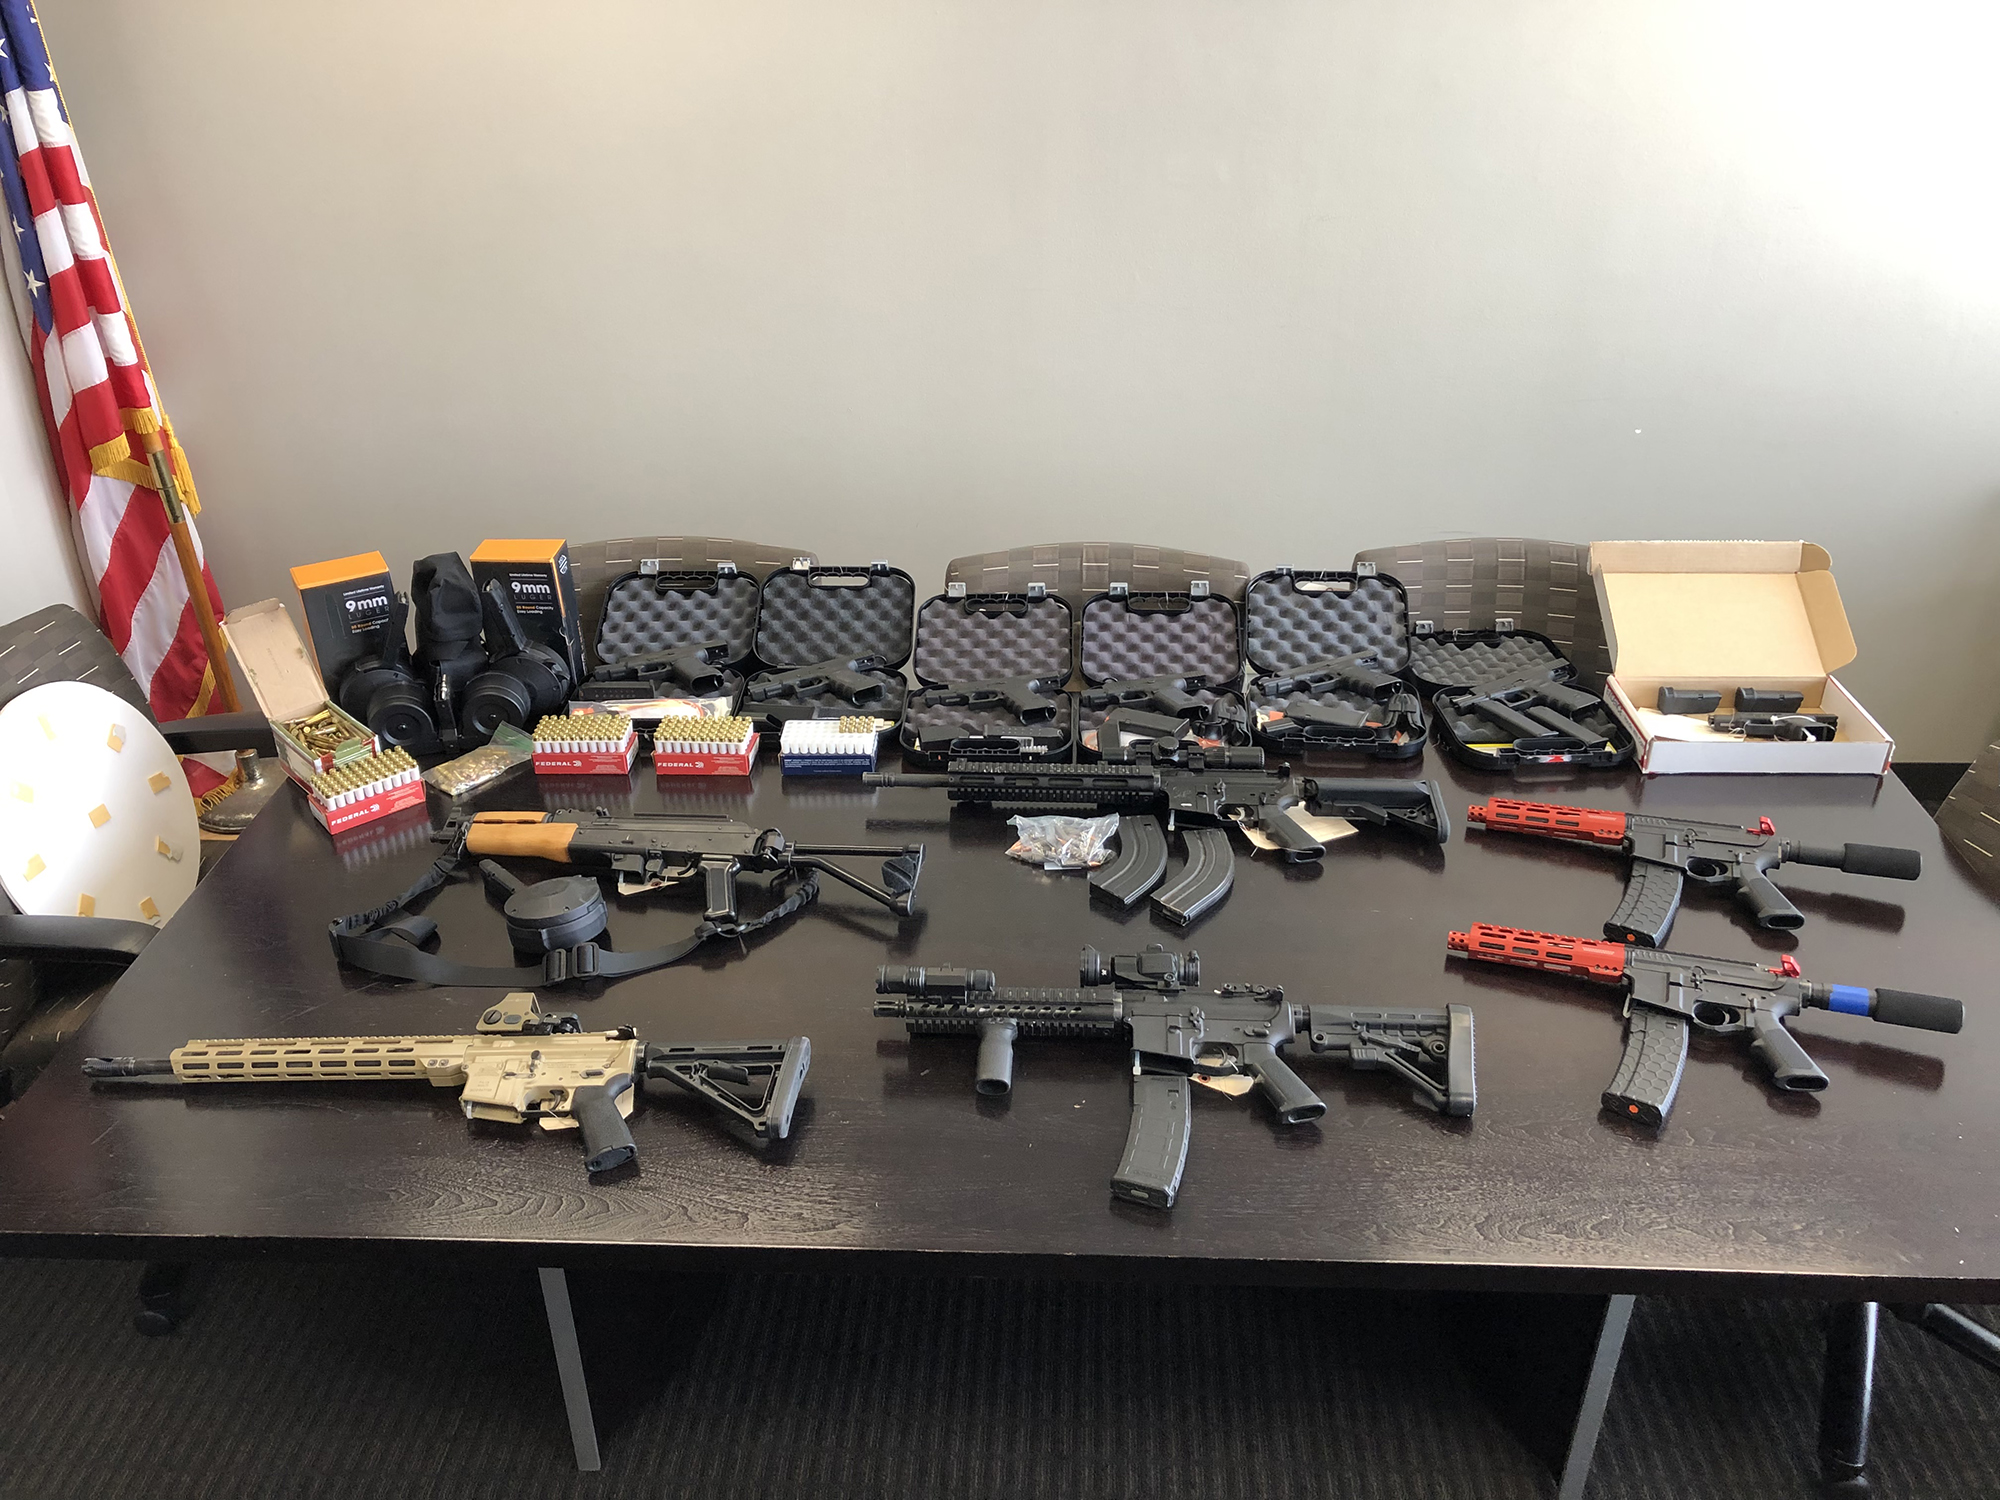 1 arrested for possession of handgun in San Jose